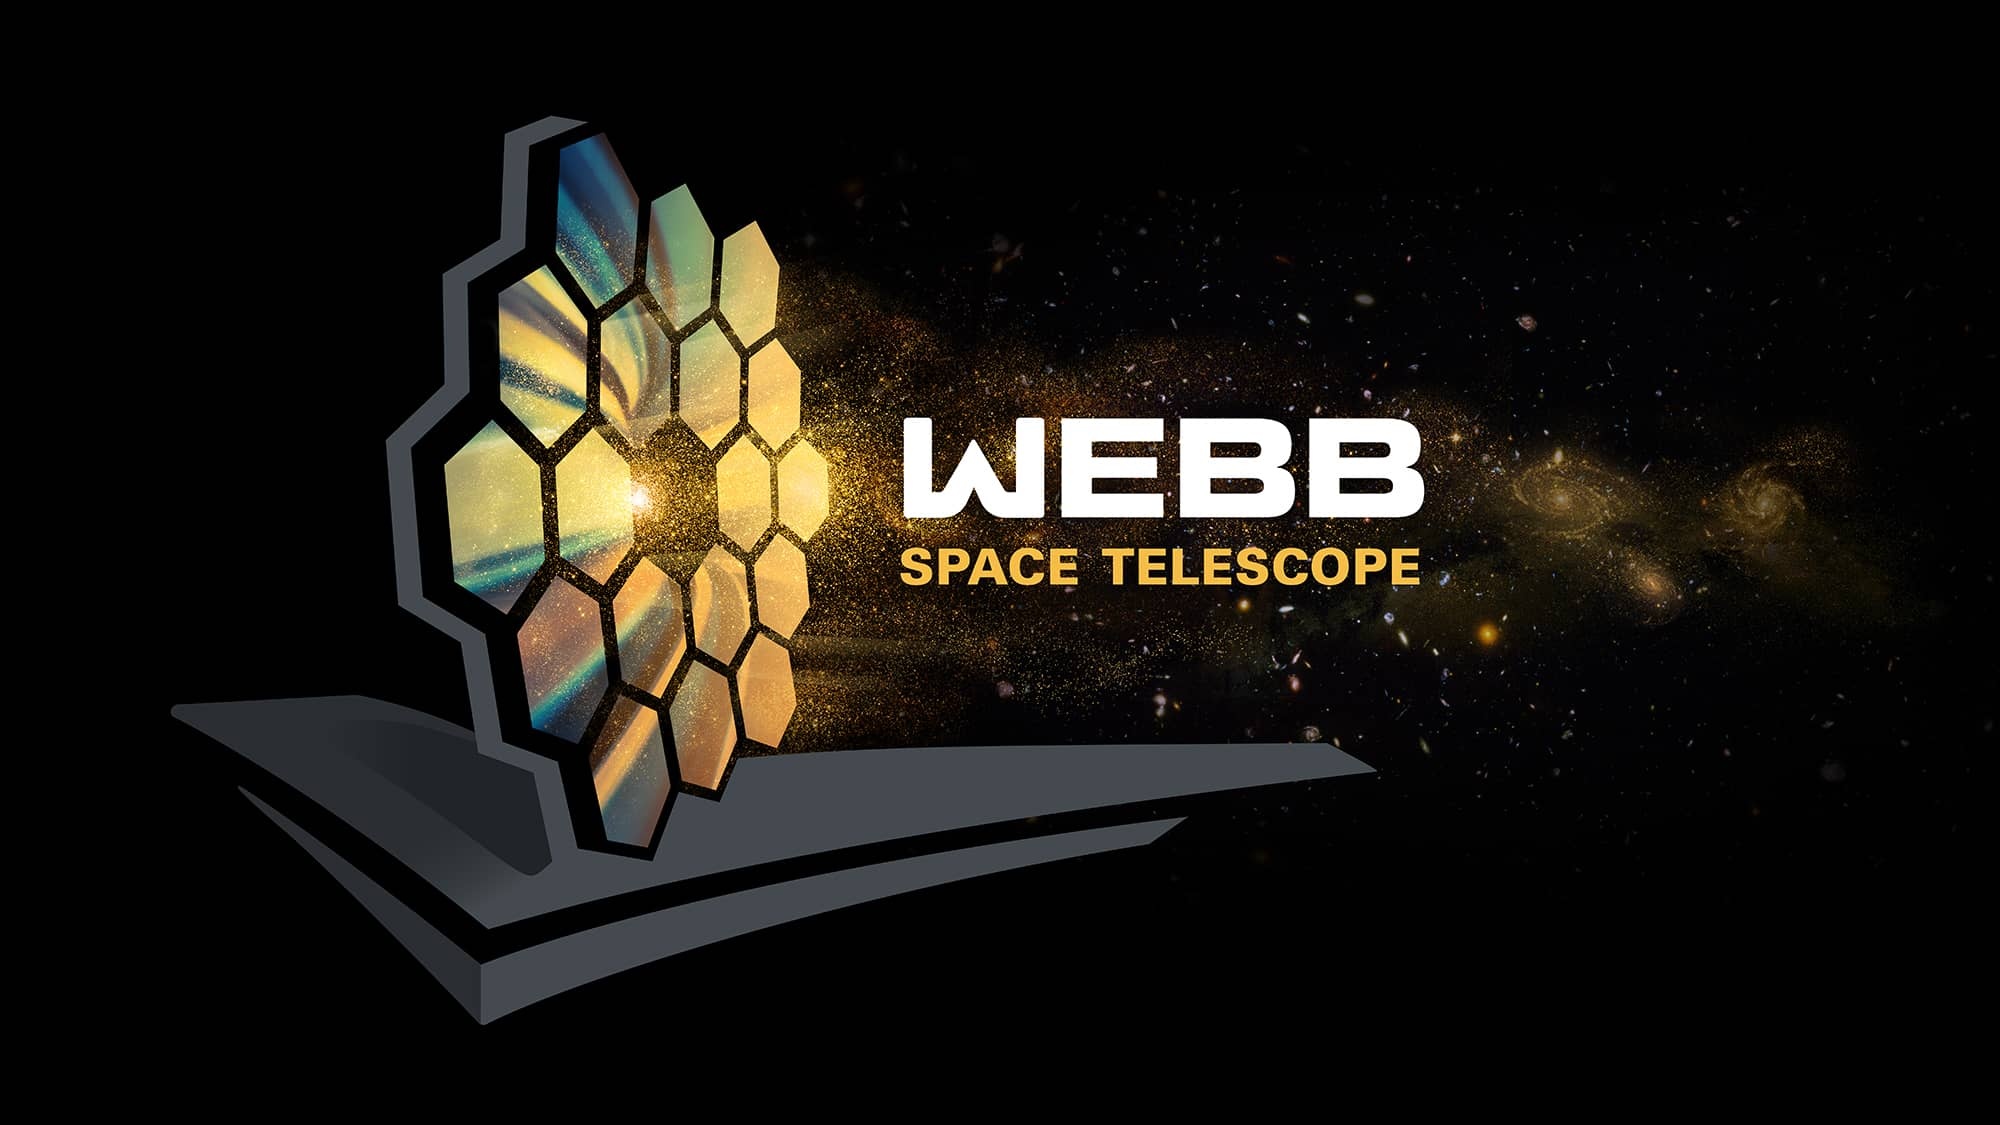 James Webb Space Telescope, First images, Reveal, Astrophotography workshop, 2000x1130 HD Desktop